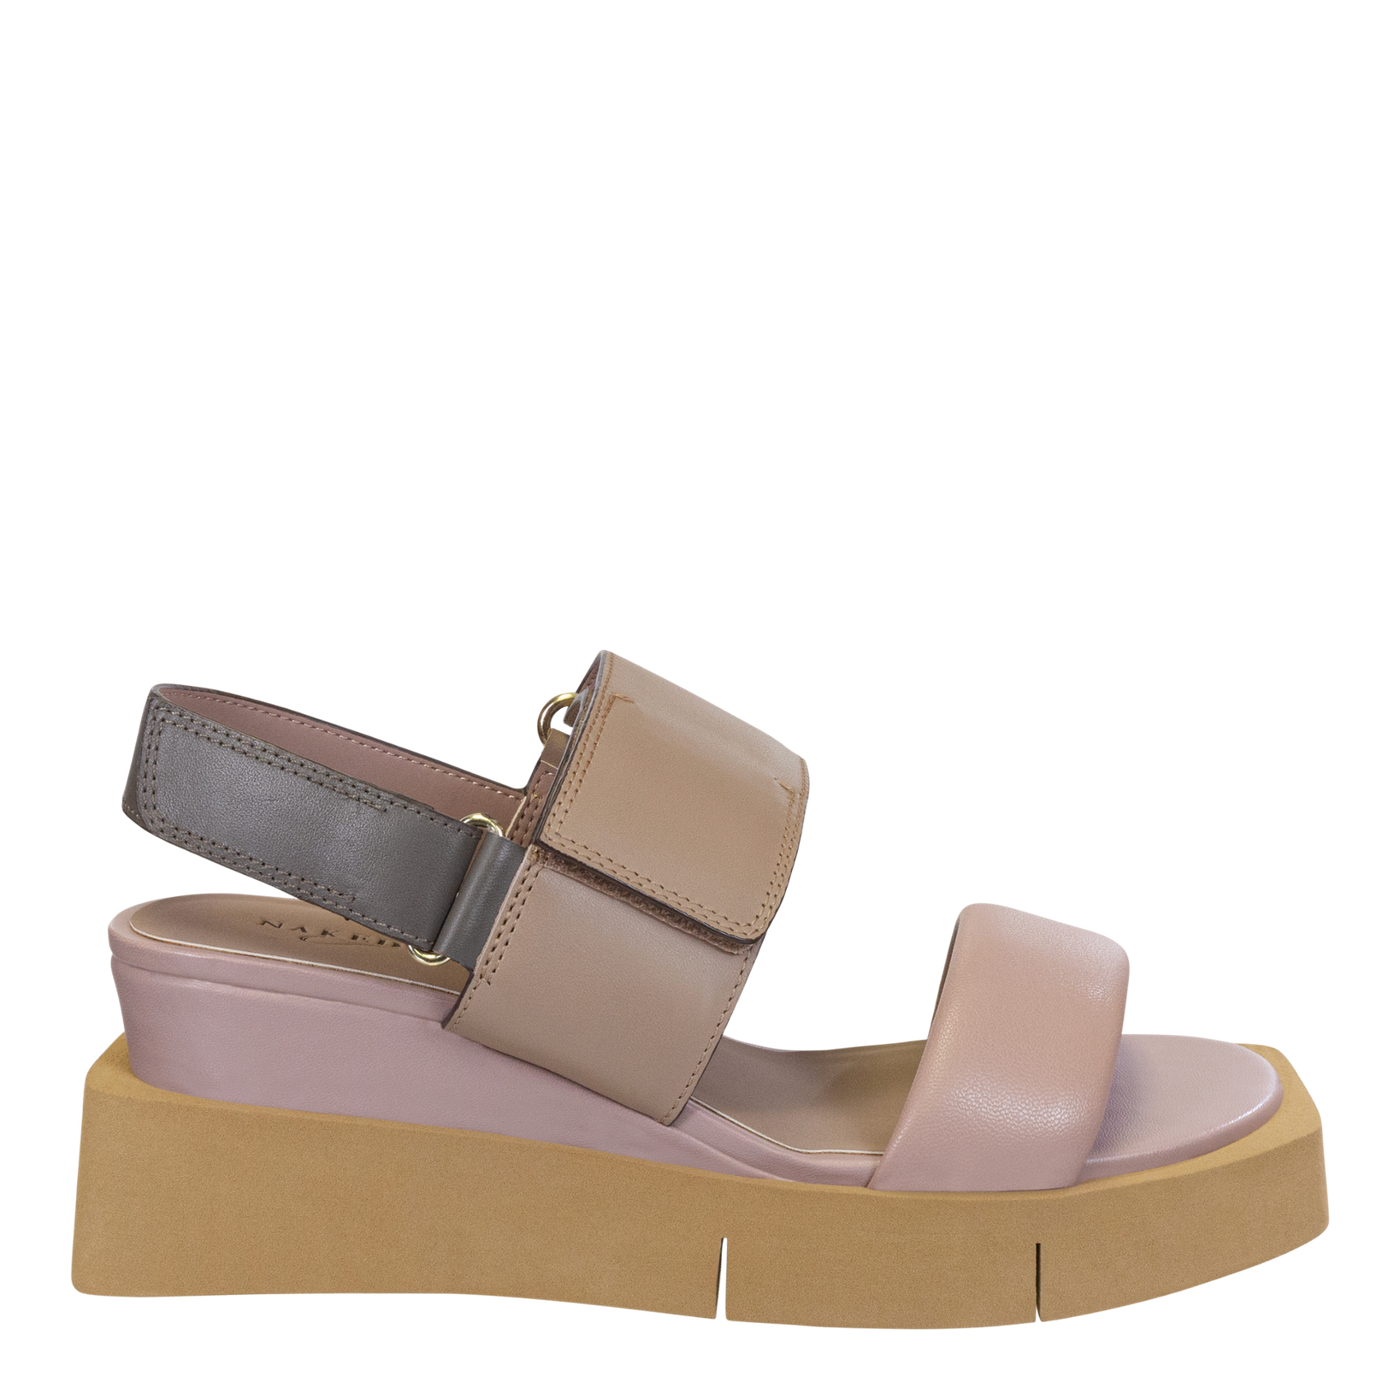 NAKED FEET - PARADOX in ECRU Wedge Sandals